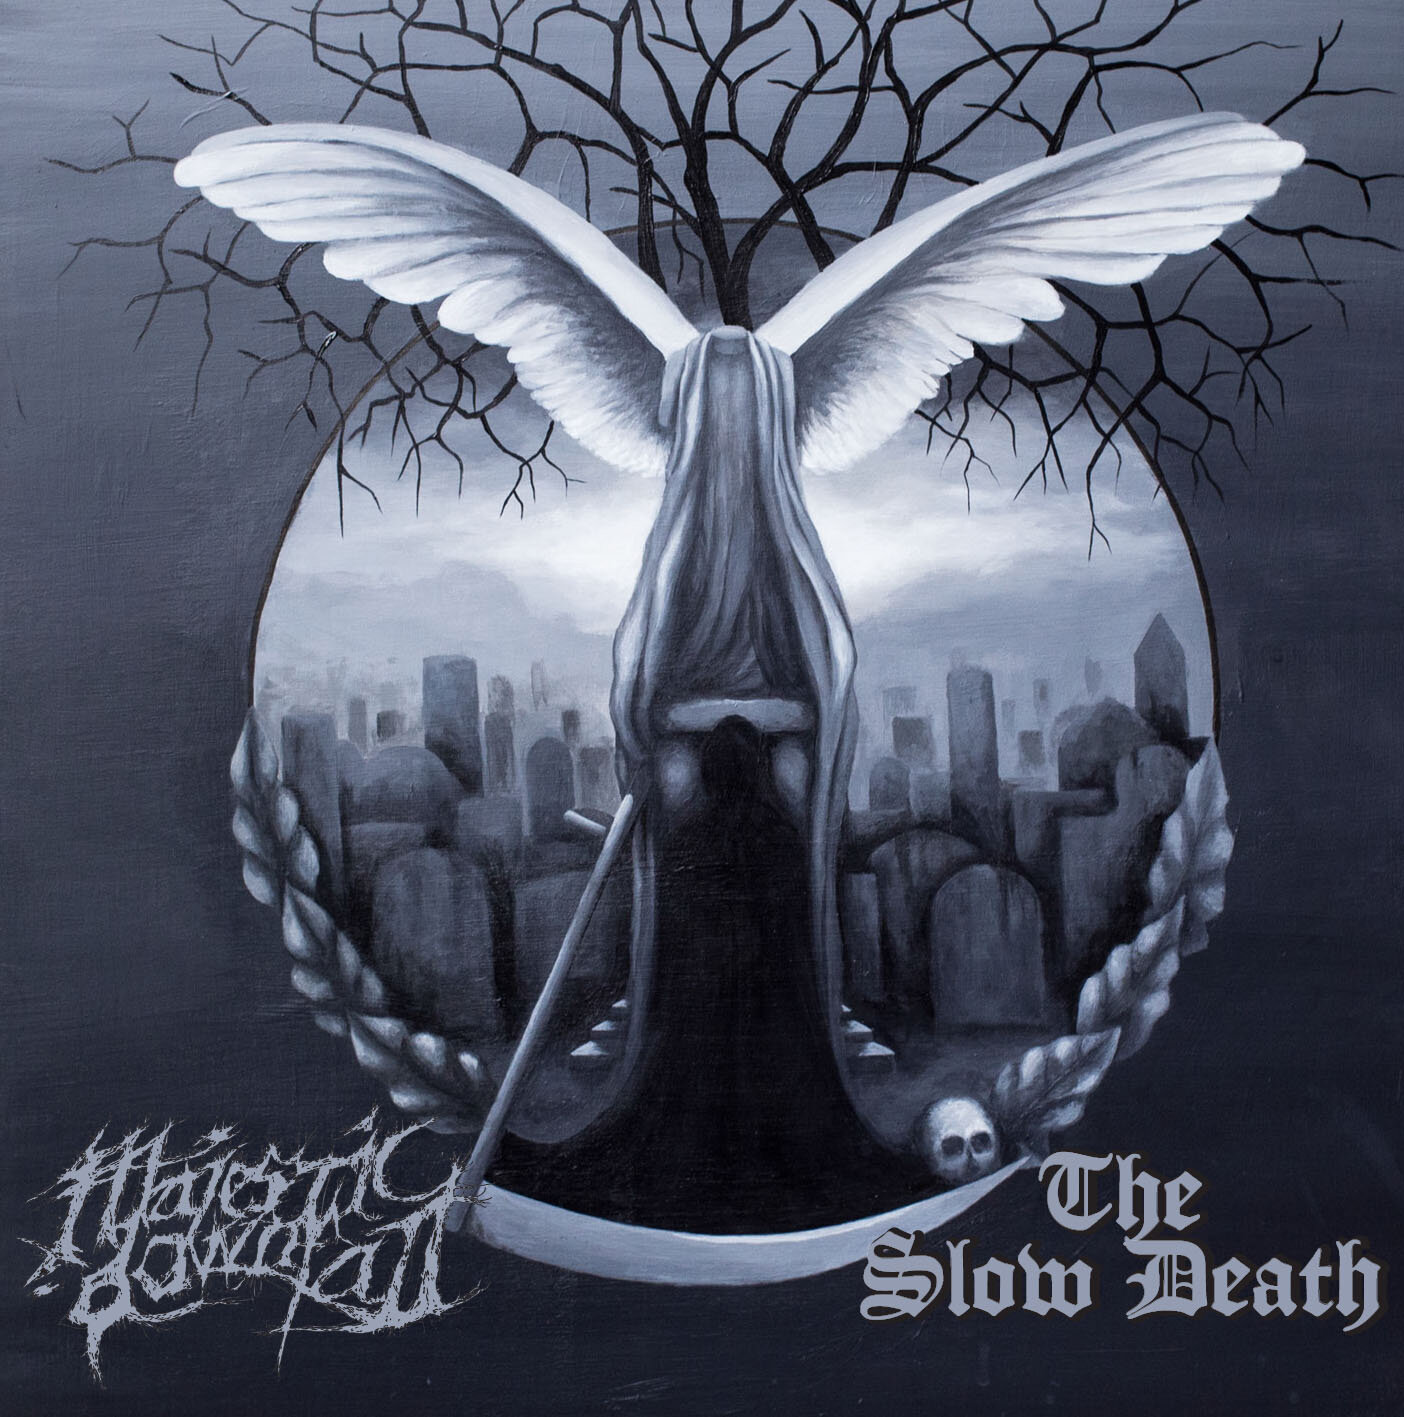 The Slow Death & Majestic Downfall split LP